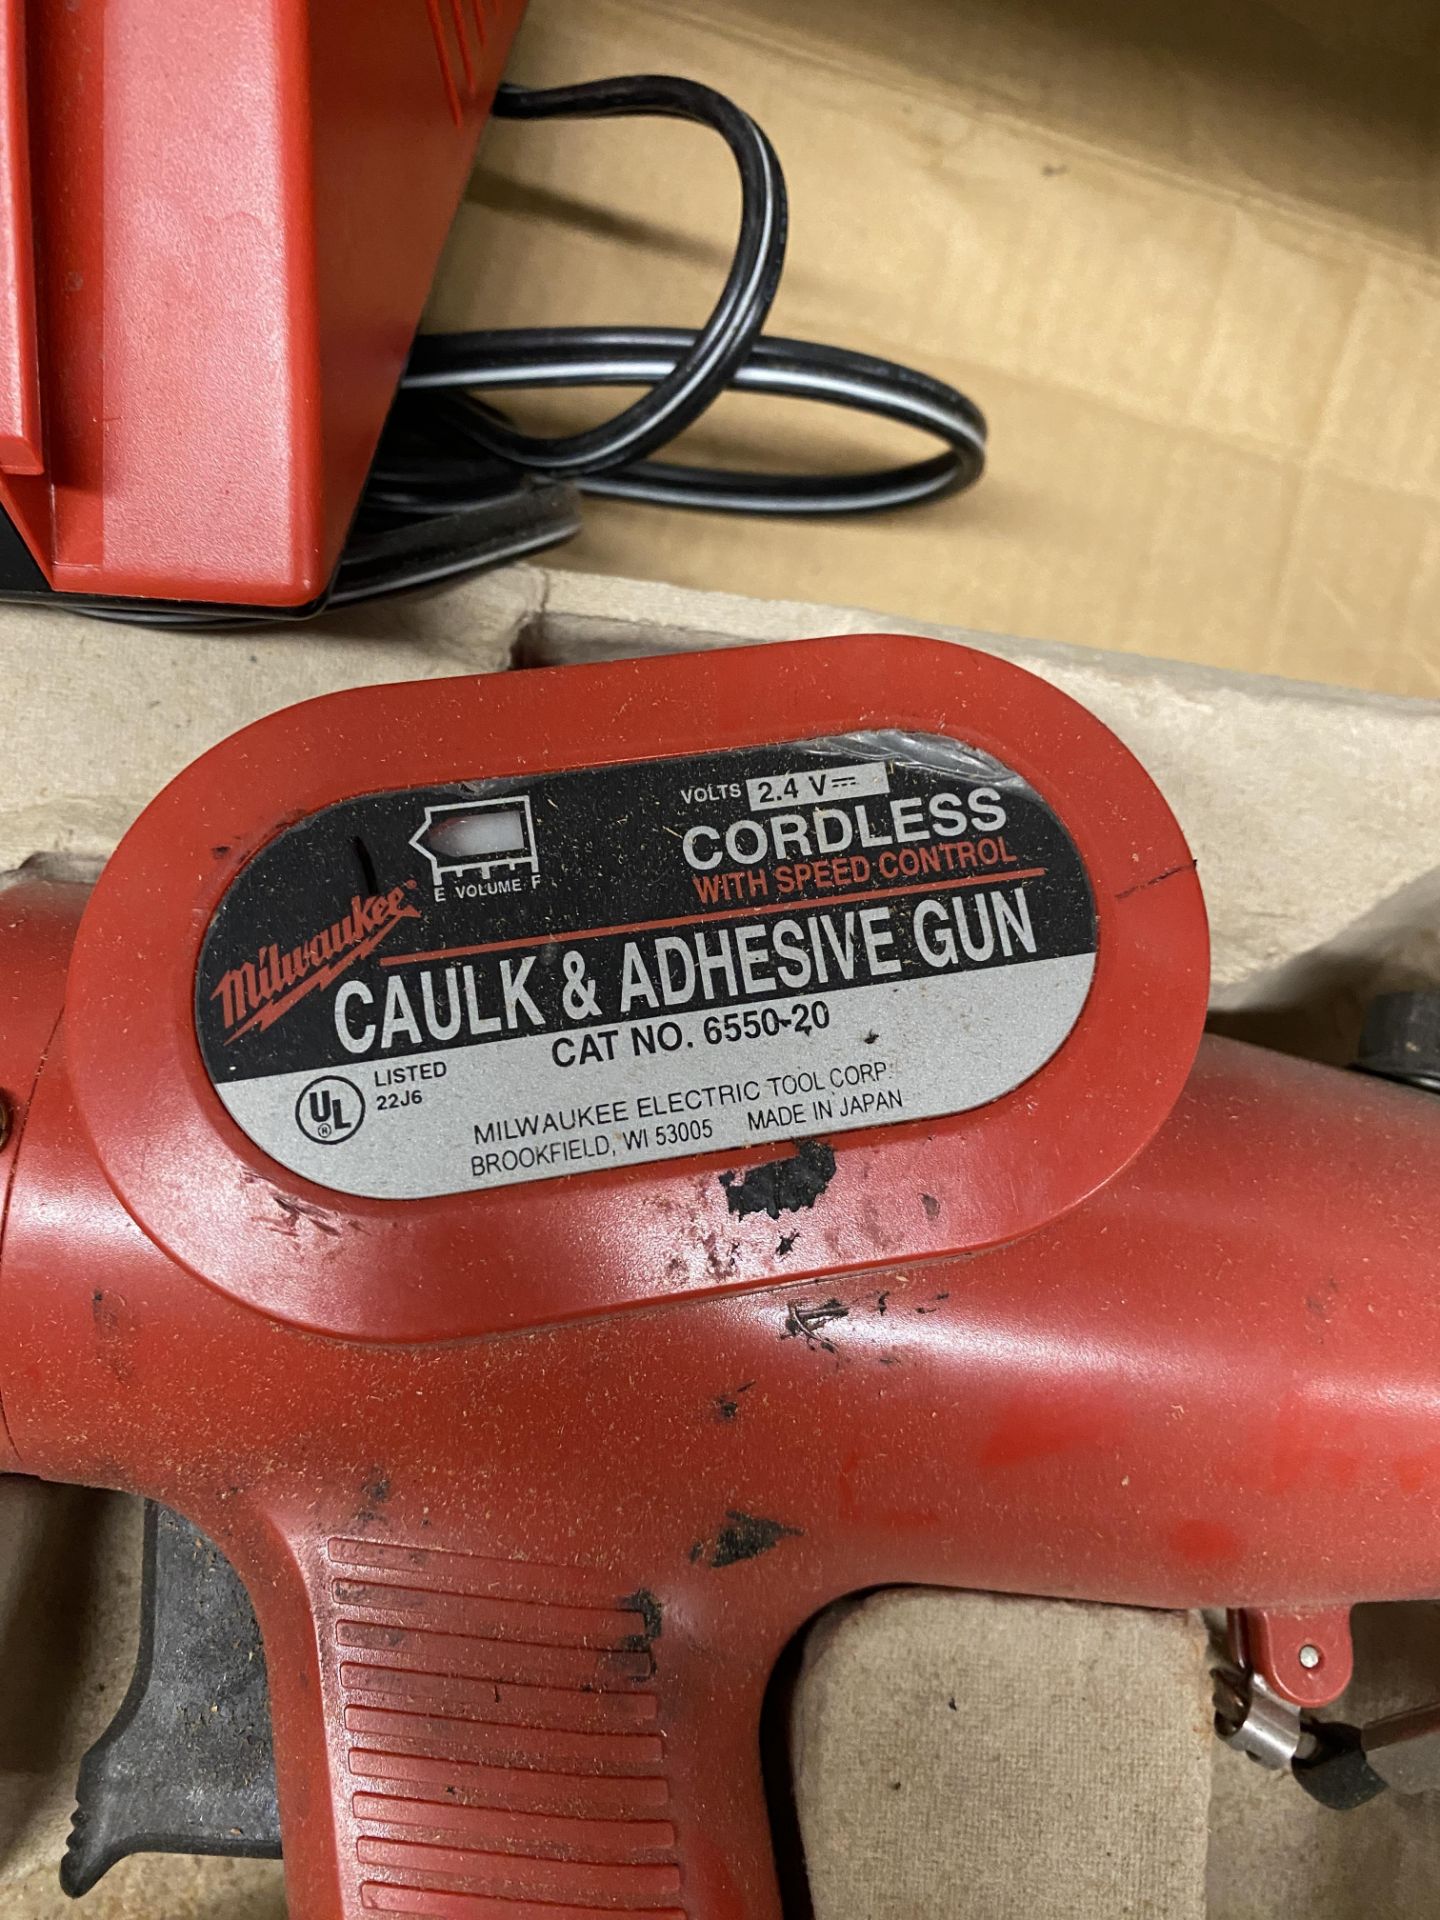 Milwaukee Cordless Caulk & Adhesive Gun #6550-20 w/ 1 Charger, 1 Battery - Image 3 of 3